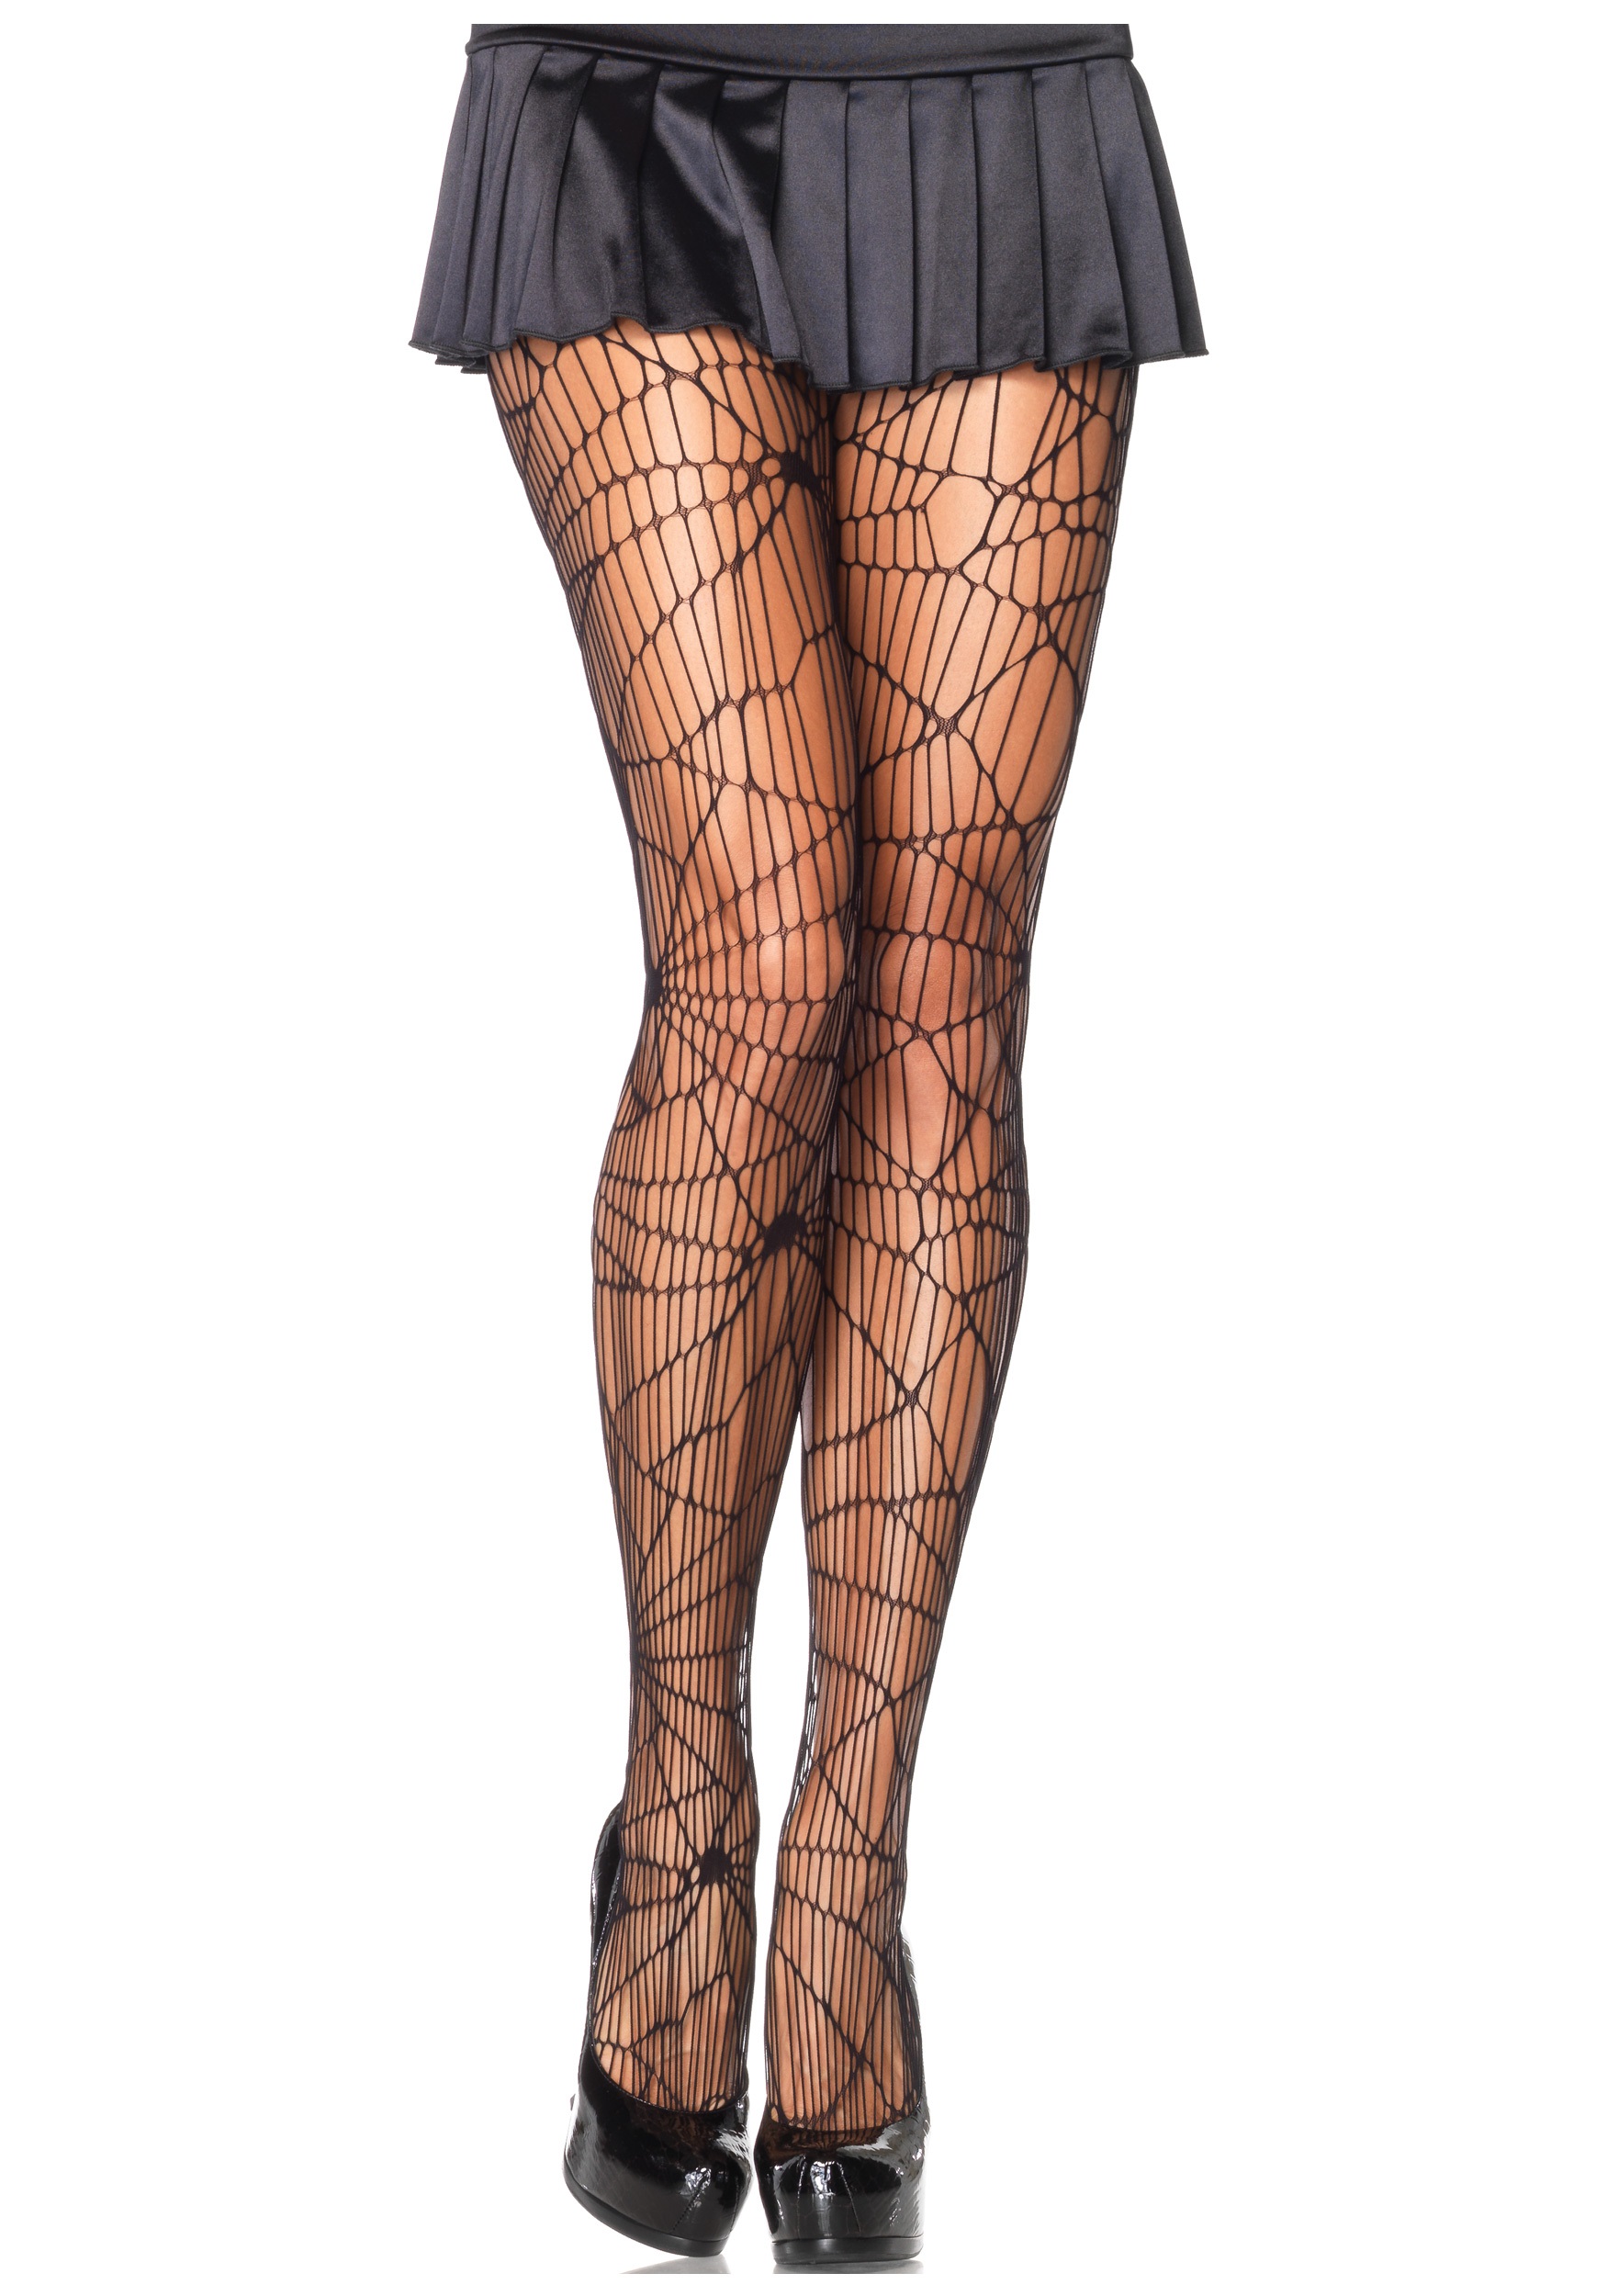 Gothic Halloween Fancy Dress Ladies Lycra Sheer Spider Web Patterned Pantyhose 